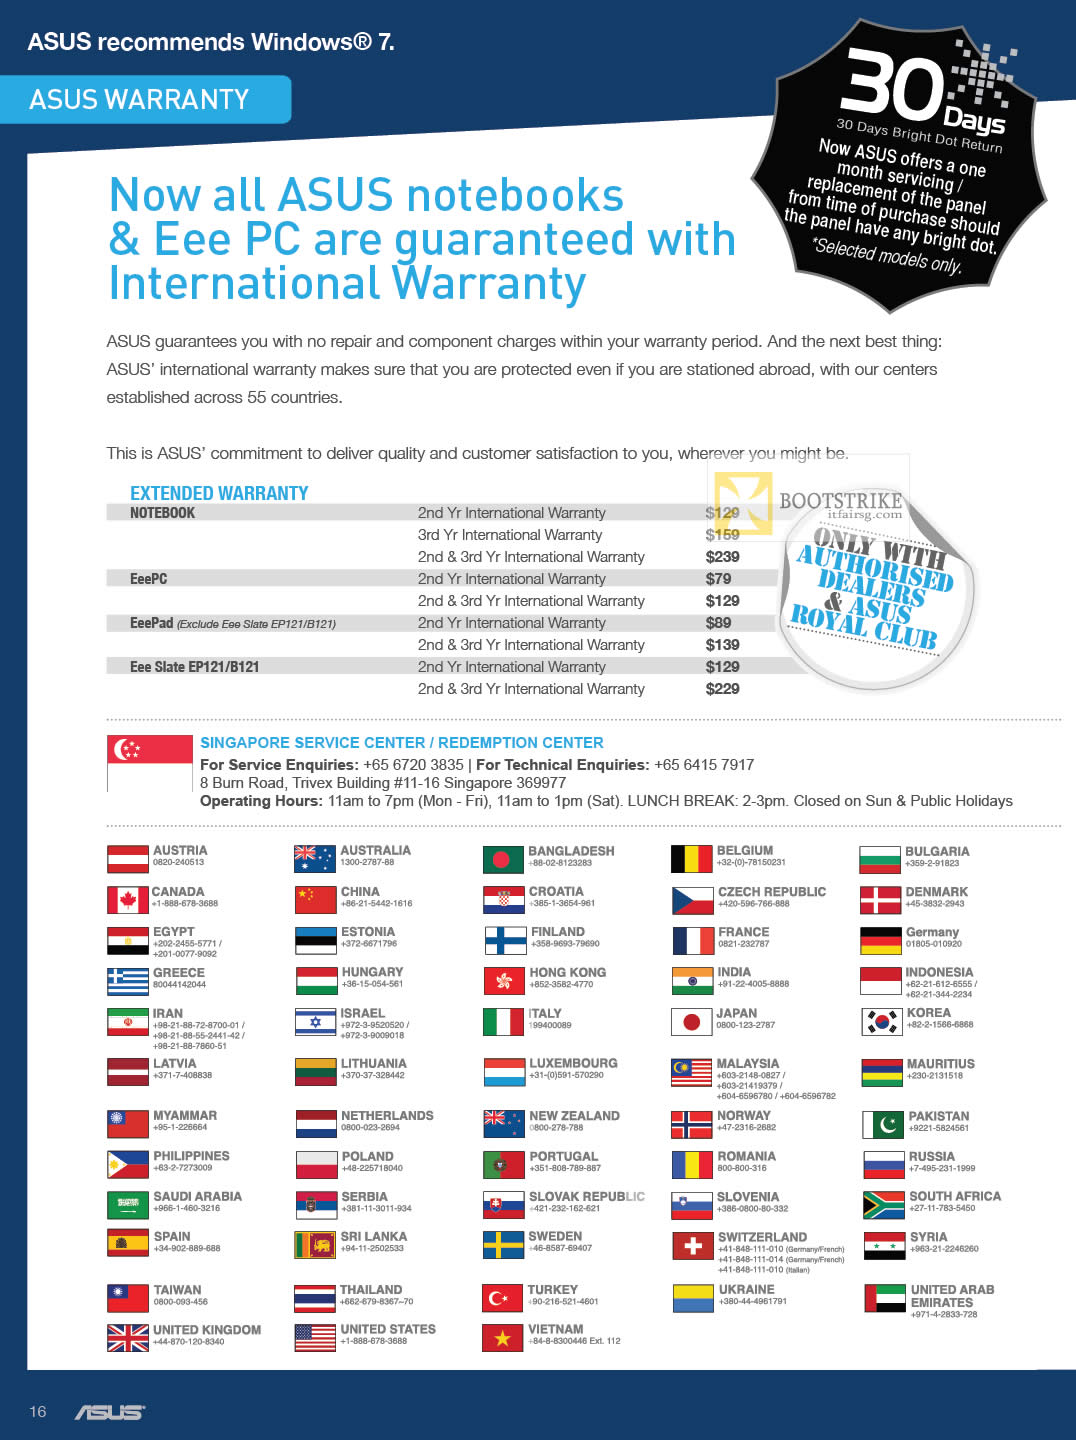 IT SHOW 2012 price list image brochure of ASUS Notebooks, Eee PC International Warranty, Extended Warranty